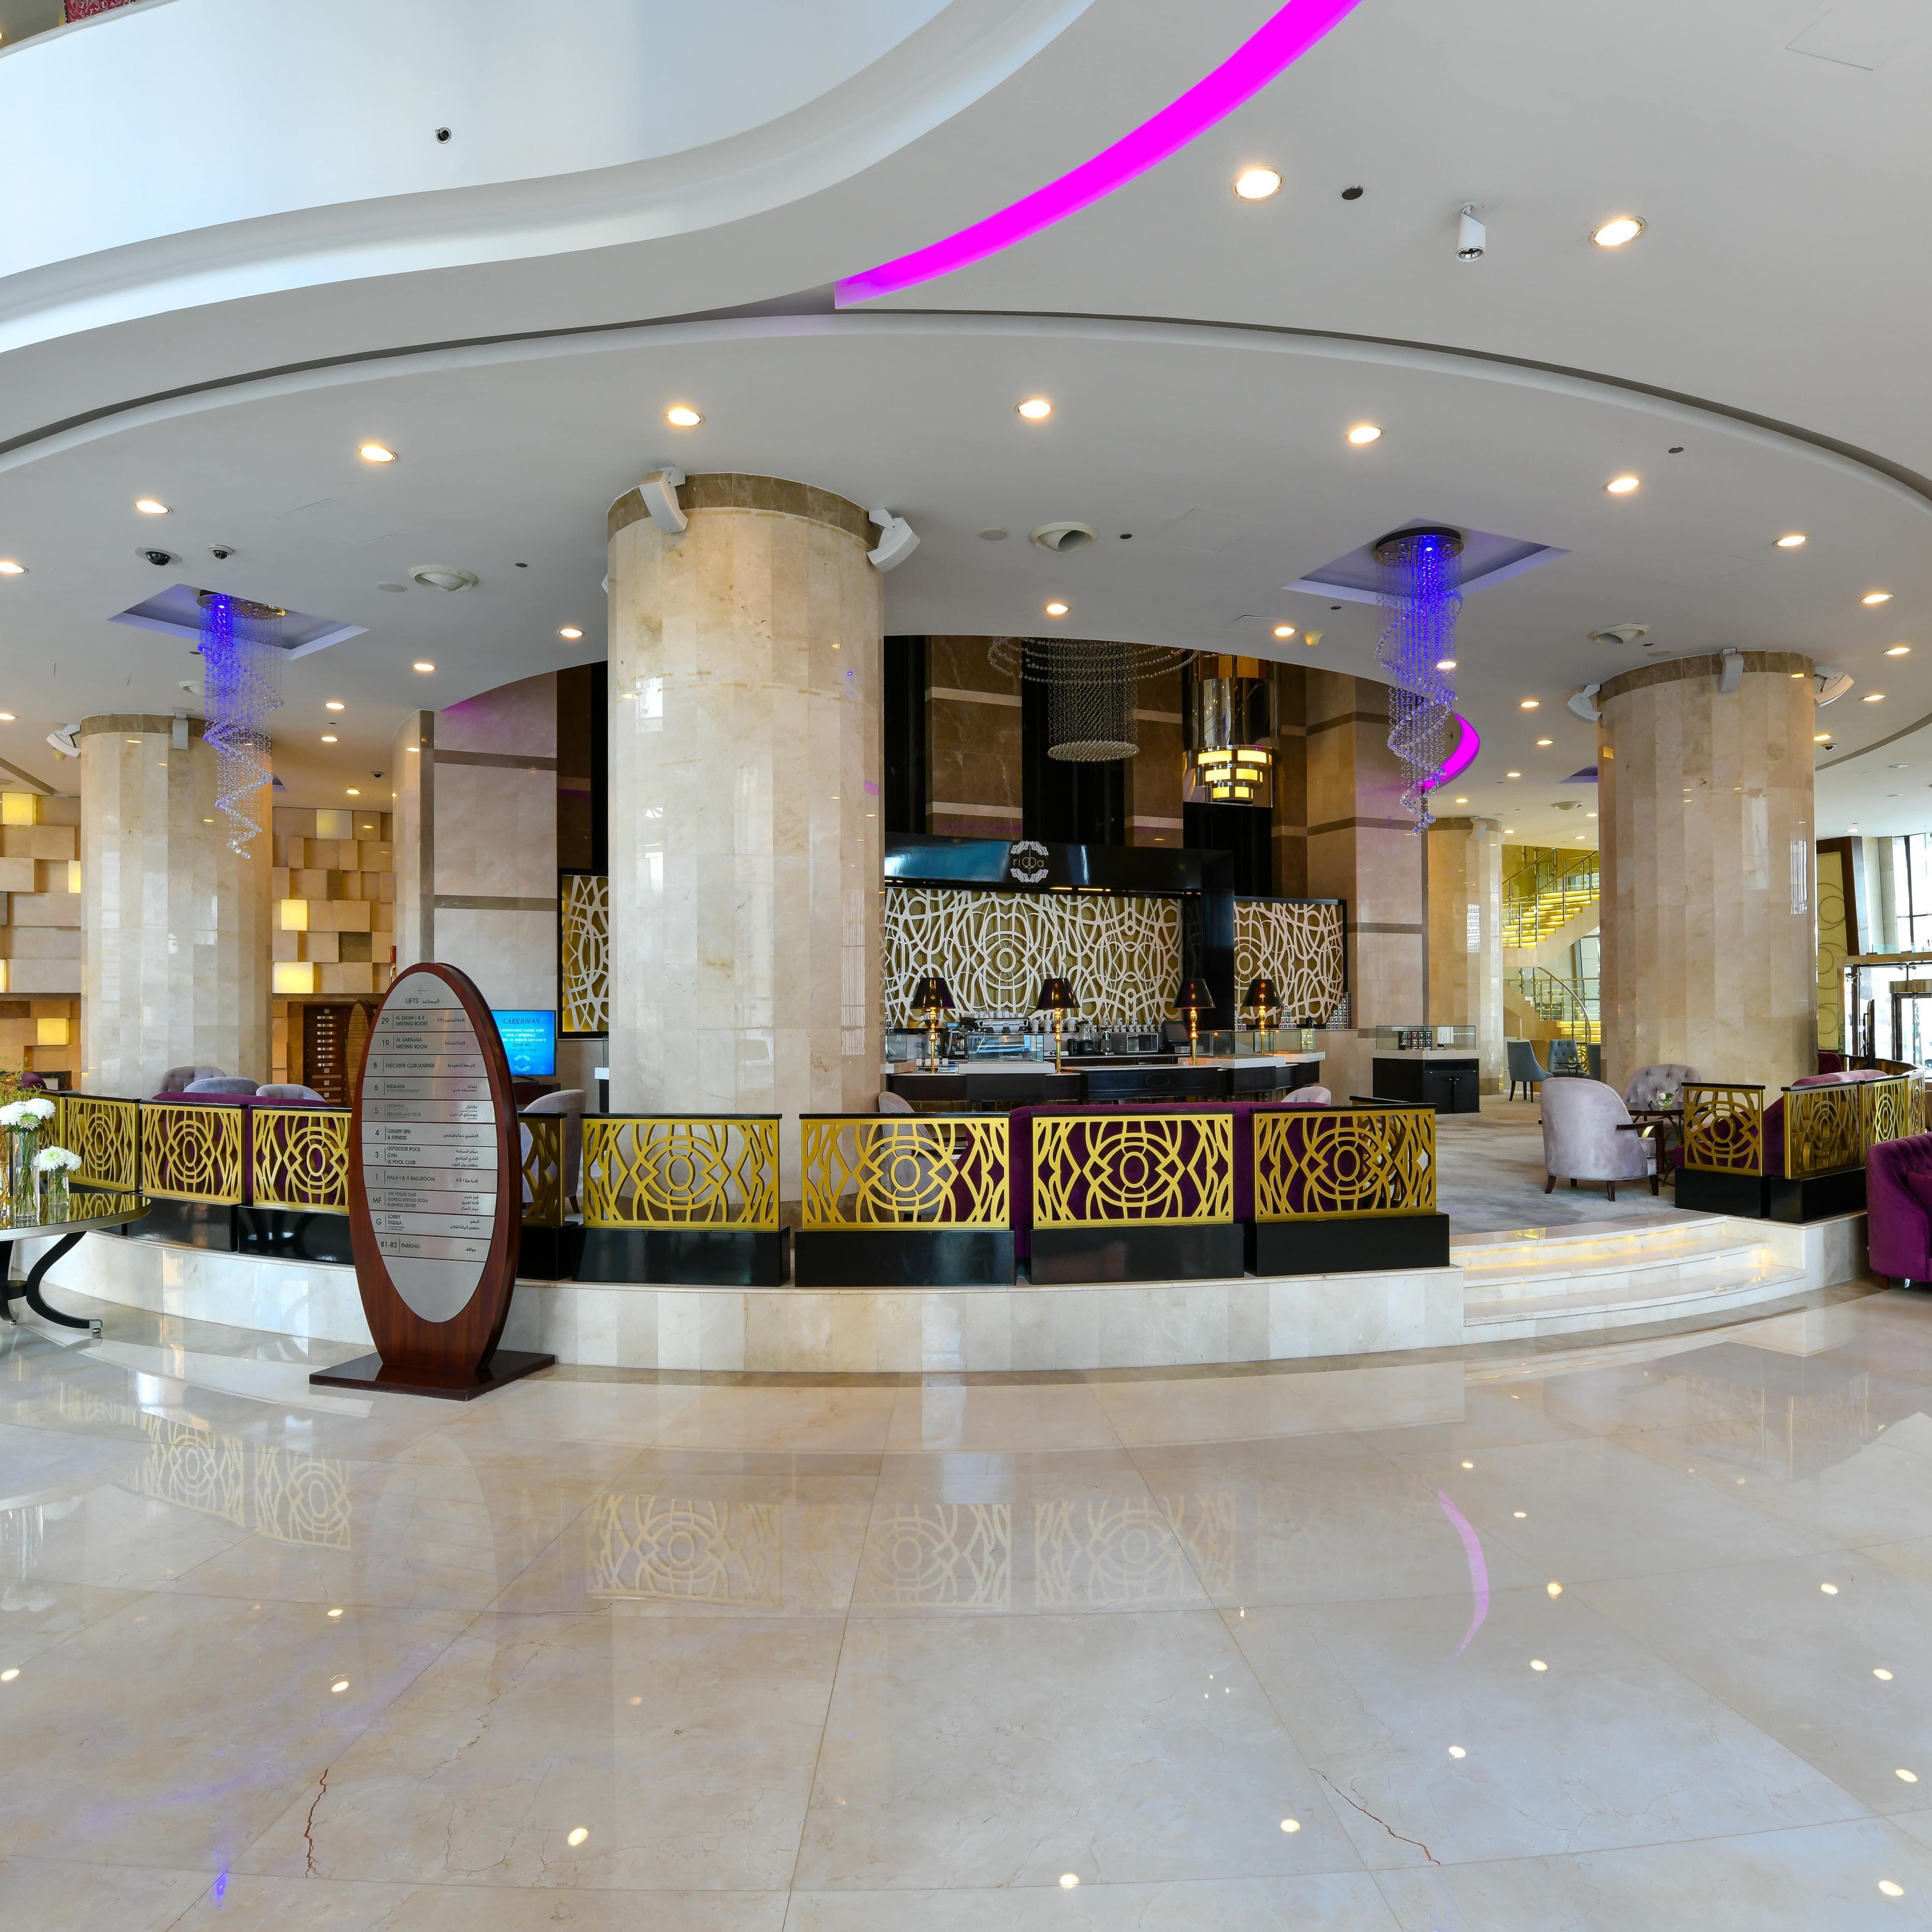 Hotel Lobby panaromic view